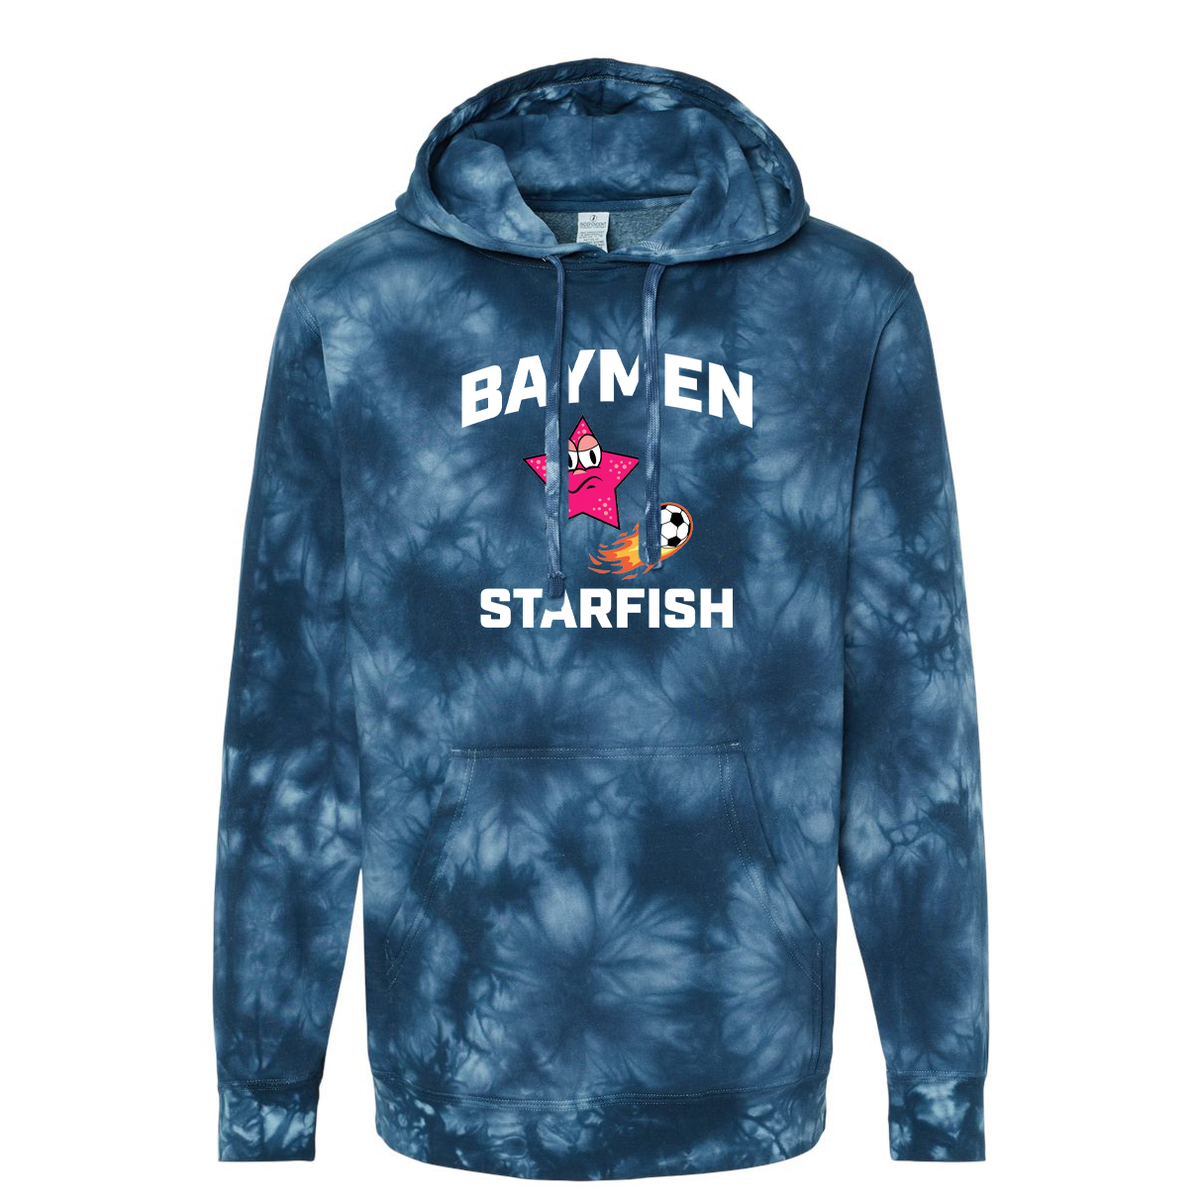 Baymen Starfish U12 Pigment-Dyed Hooded Sweatshirt